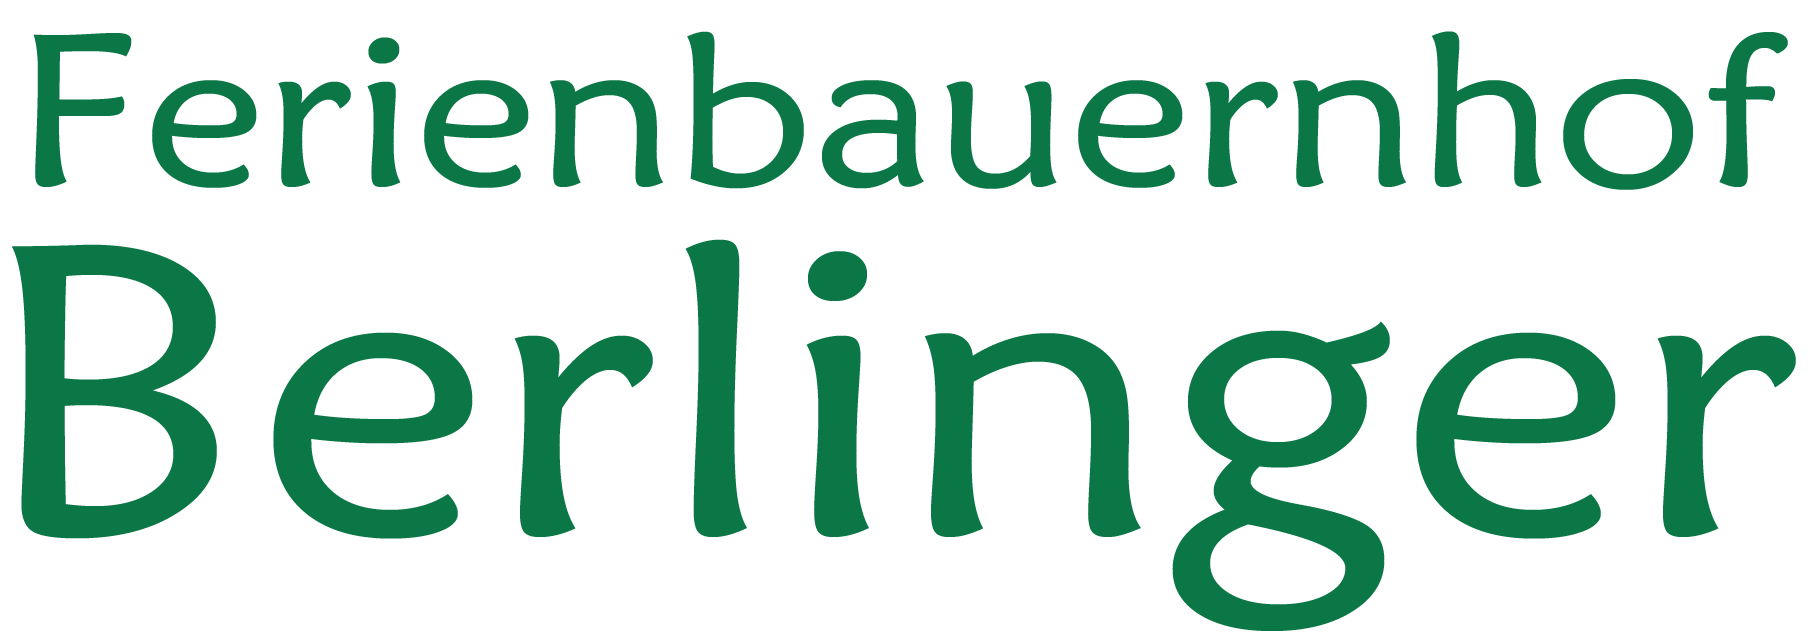 Ferienbauernhof Berlinger